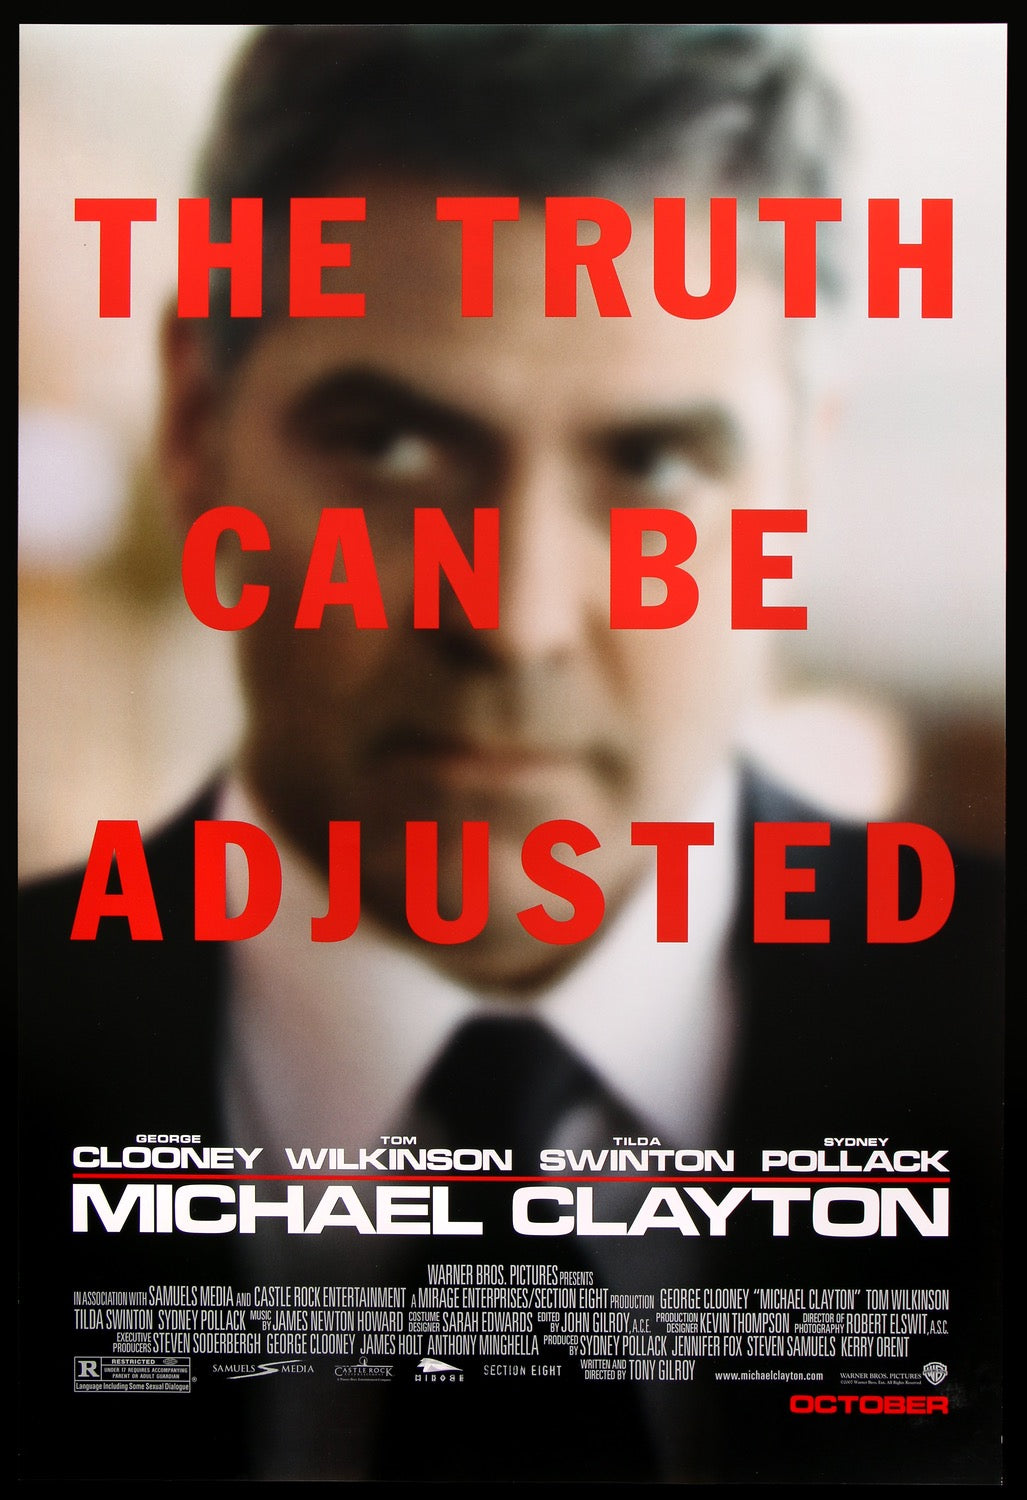 Michael Clayton (2007) original movie poster for sale at Original Film Art